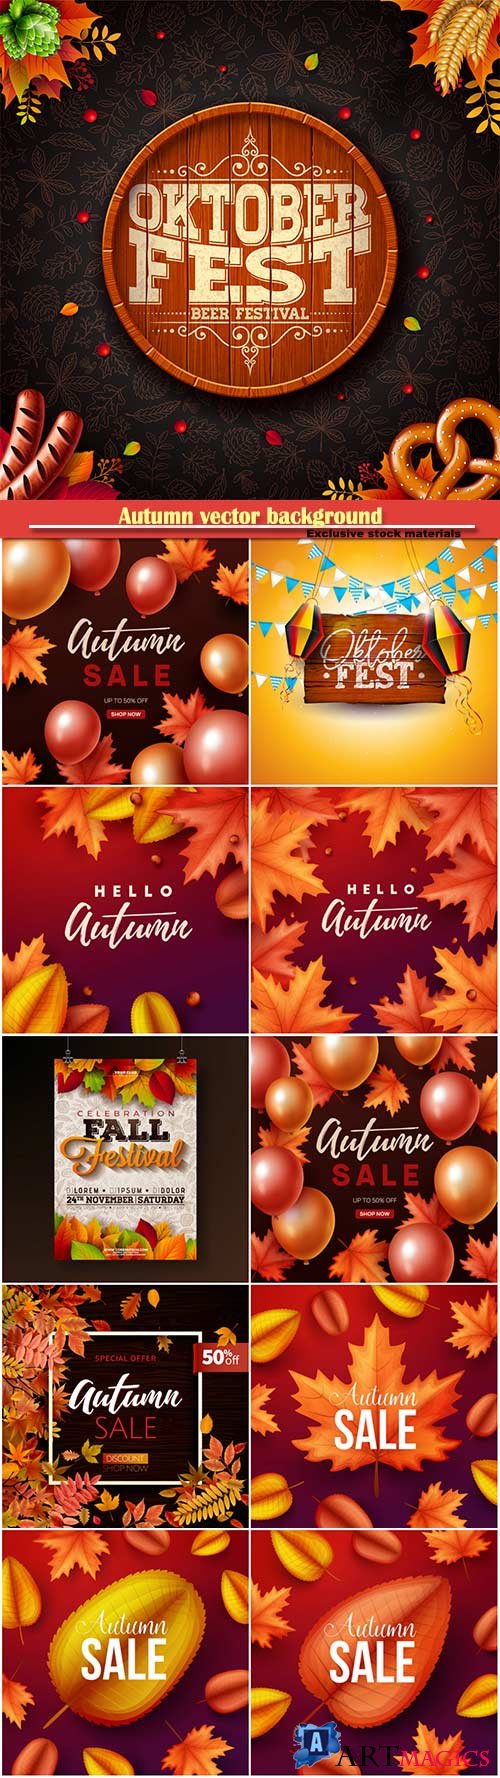 Autumn vector background, party flyer, oktoberfest banner